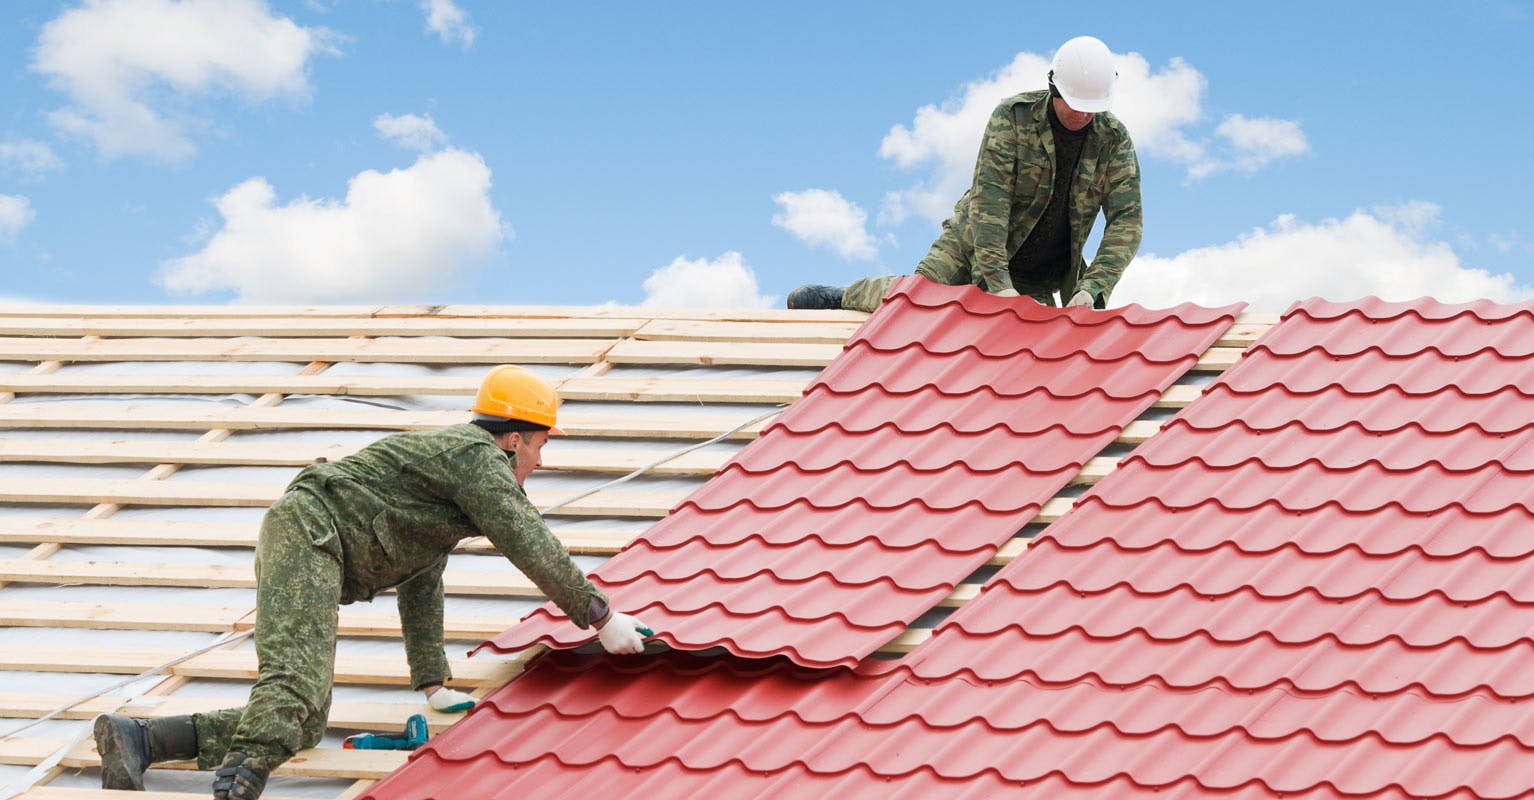 Men installing a metal roof